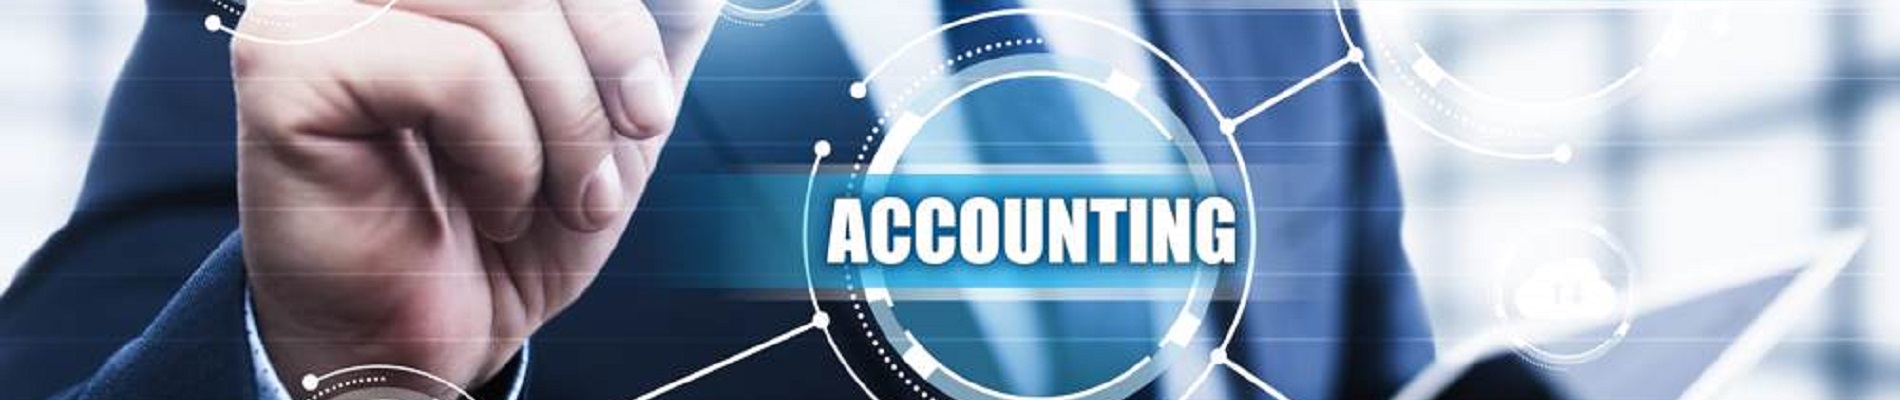 Accounting - 050409